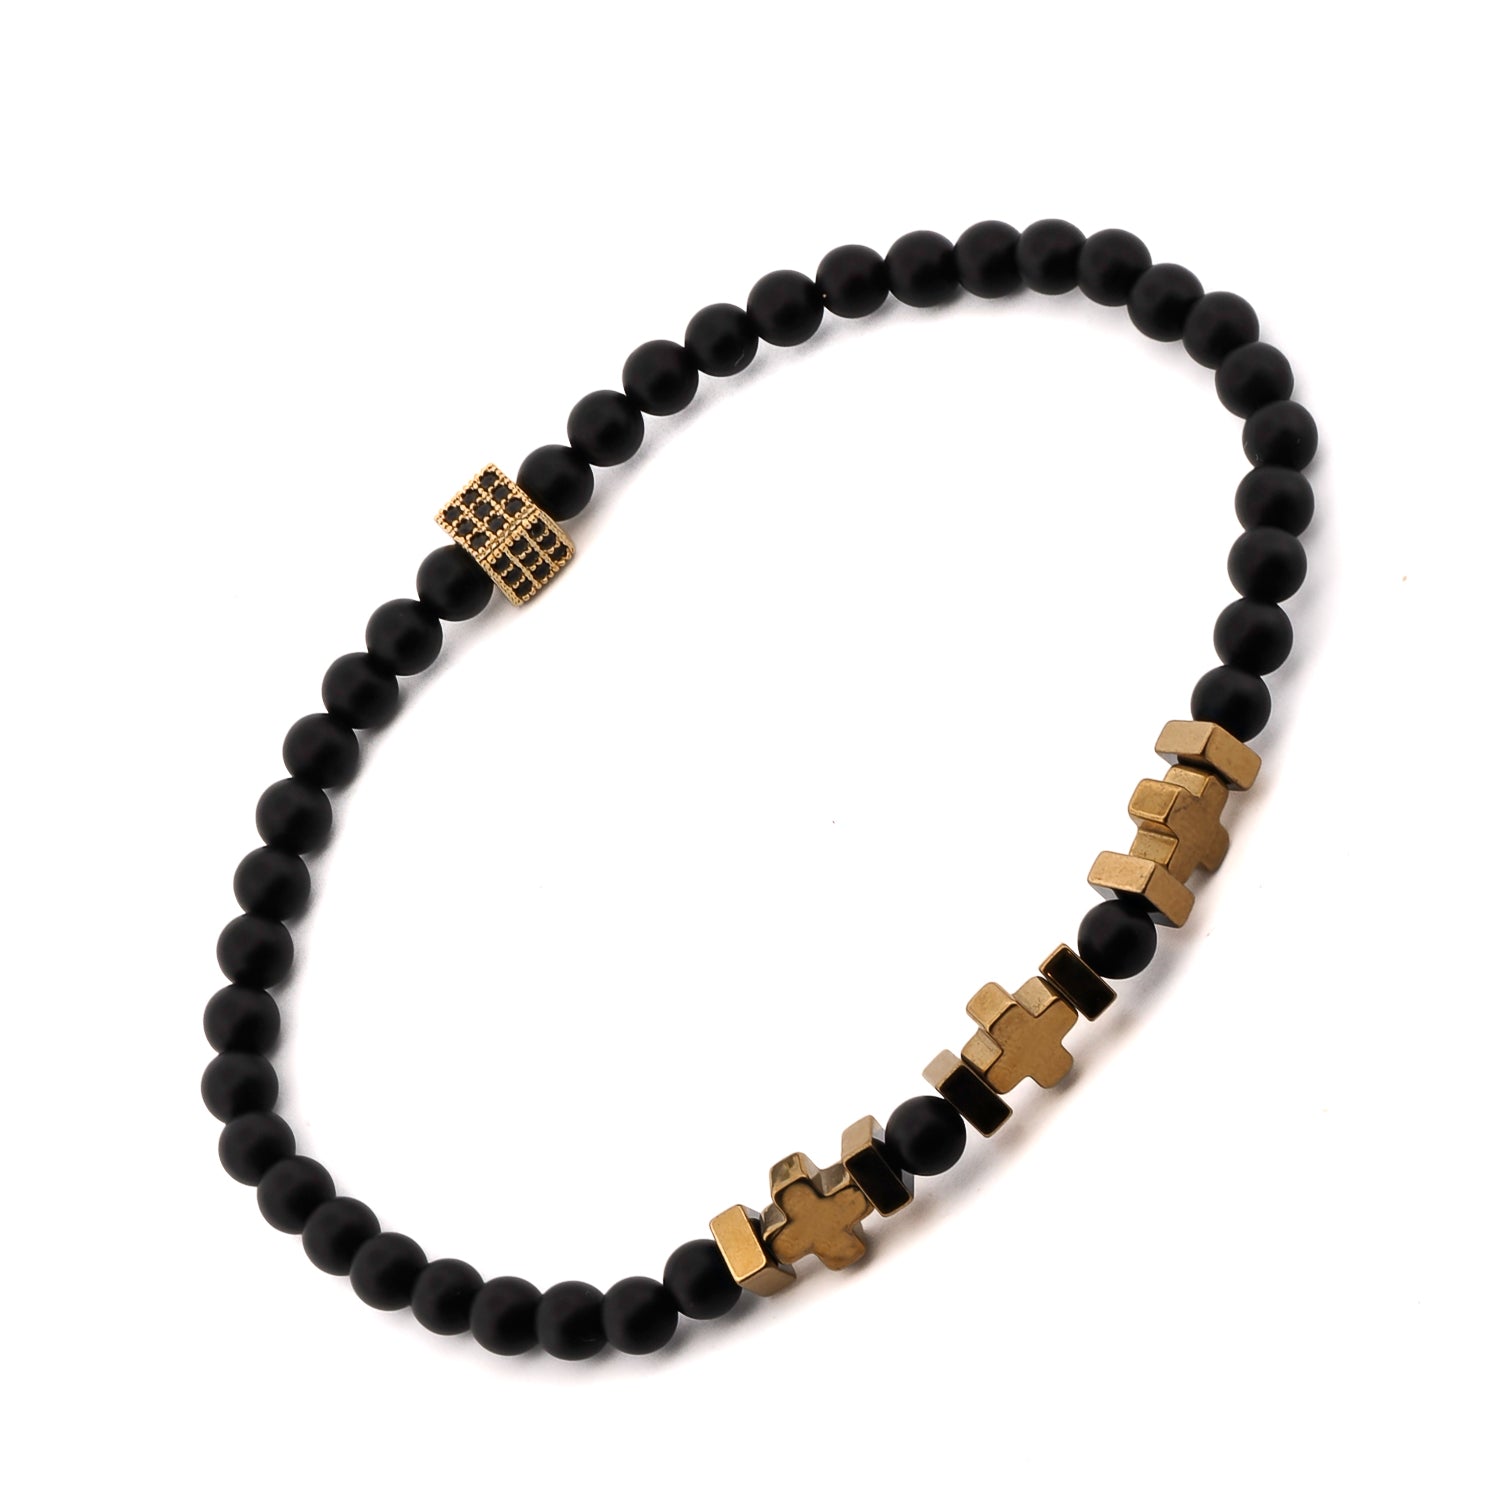 Protective Black Onyx Stone Bracelet